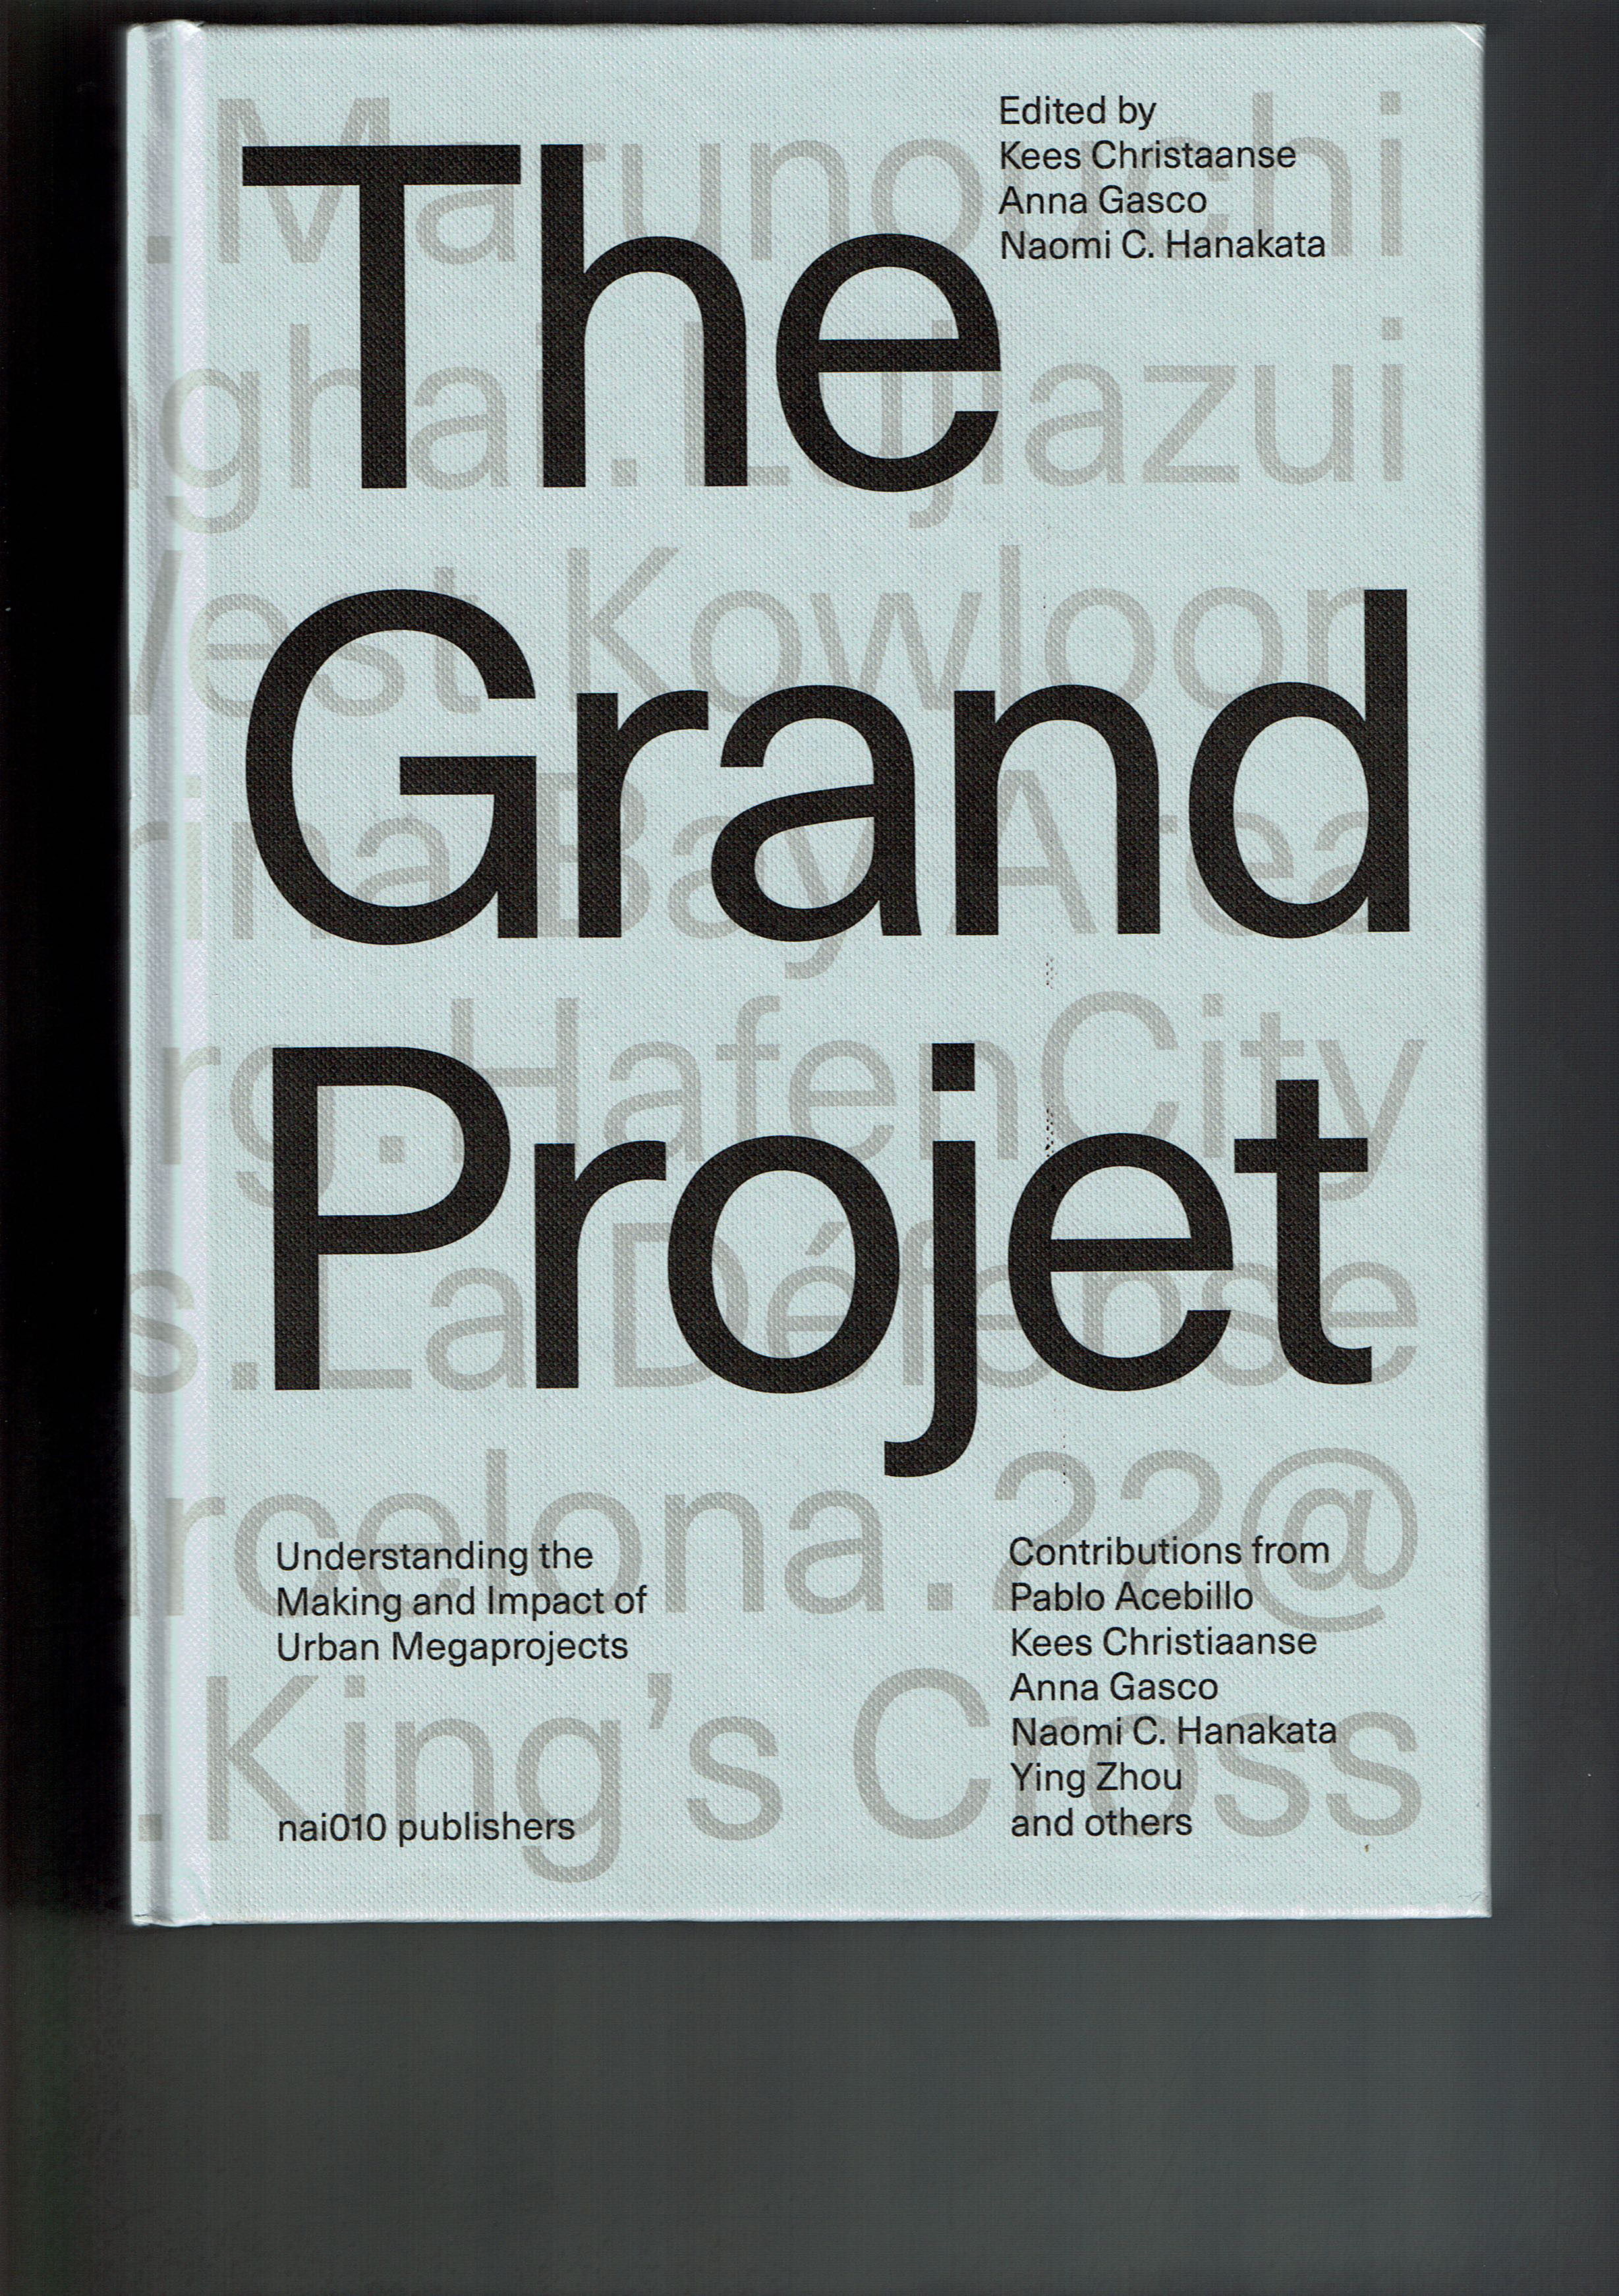 Noboru Kawagishi contributed to “The Grand Projet” Book,  published by nai010.